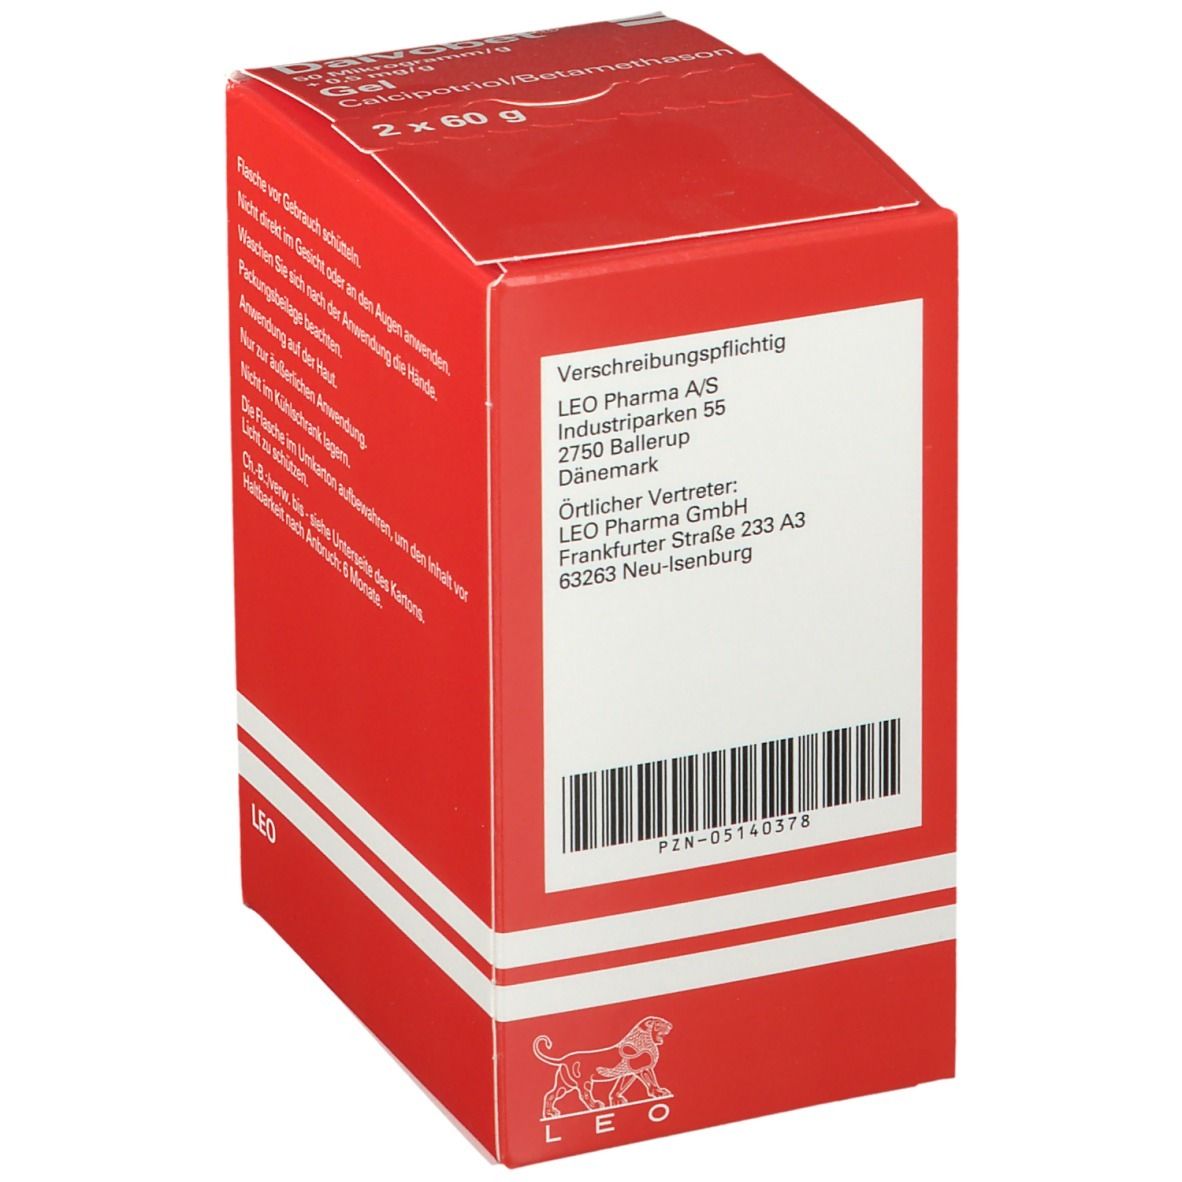 Daivobet® 50 Mikrogramm/g + 0,5 mg/g Gel